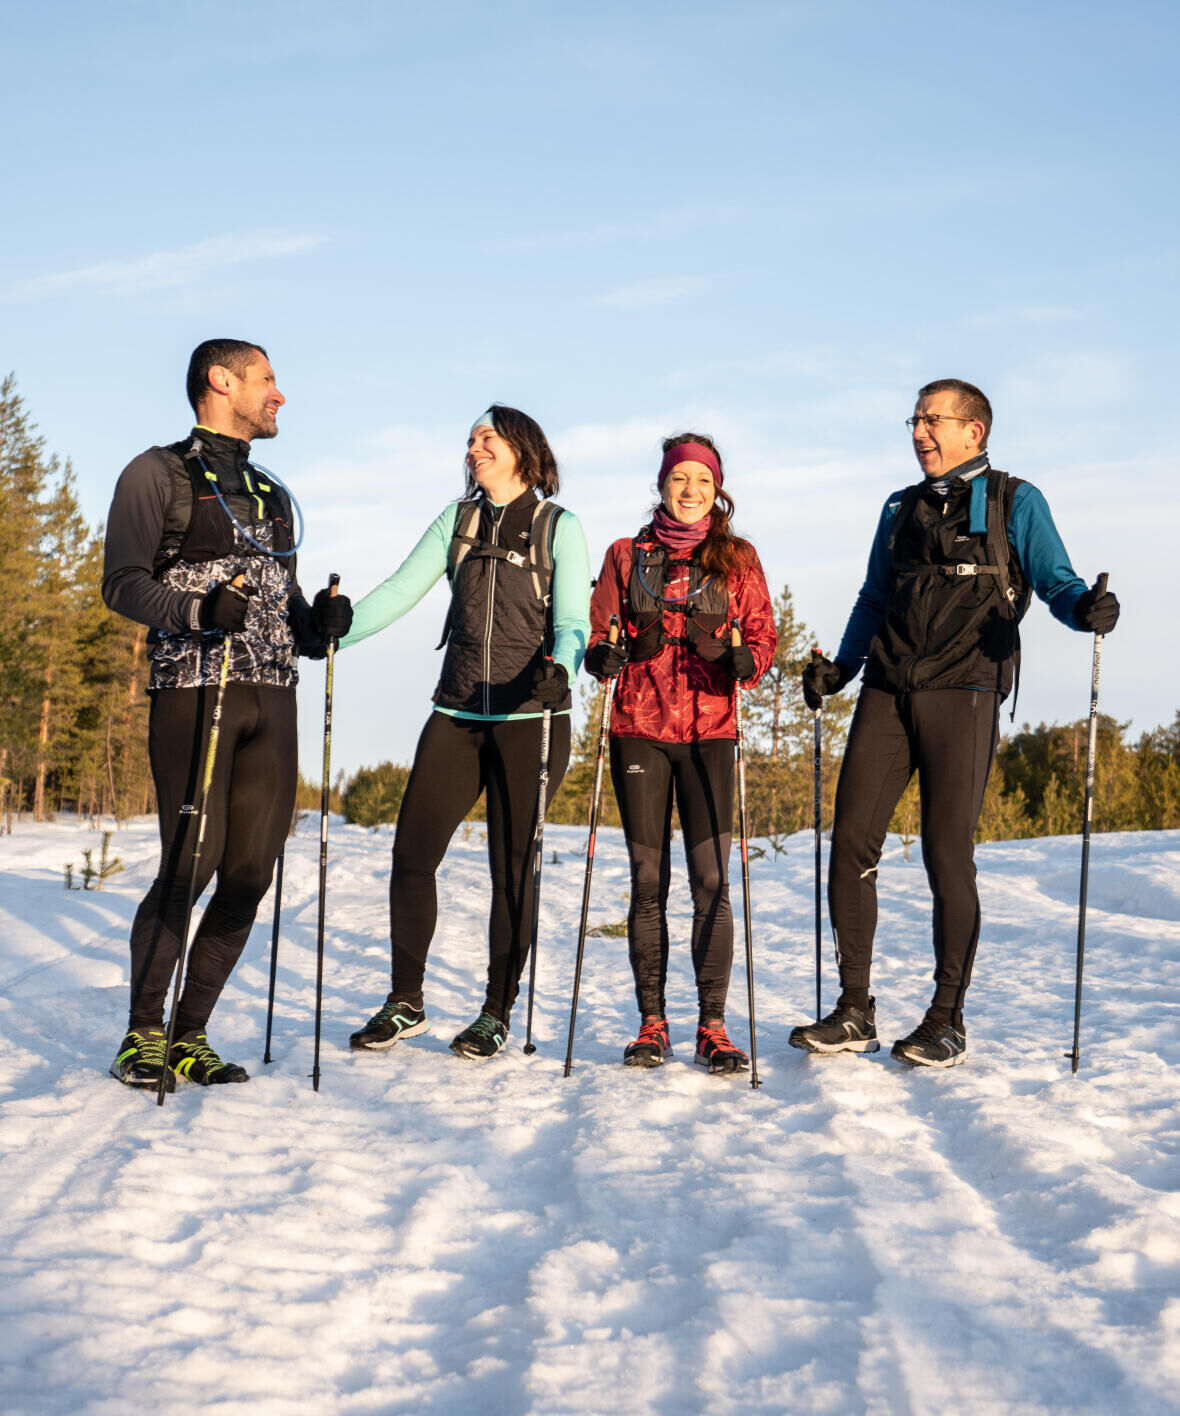 friendly-sport-Nordic-walking-sharing